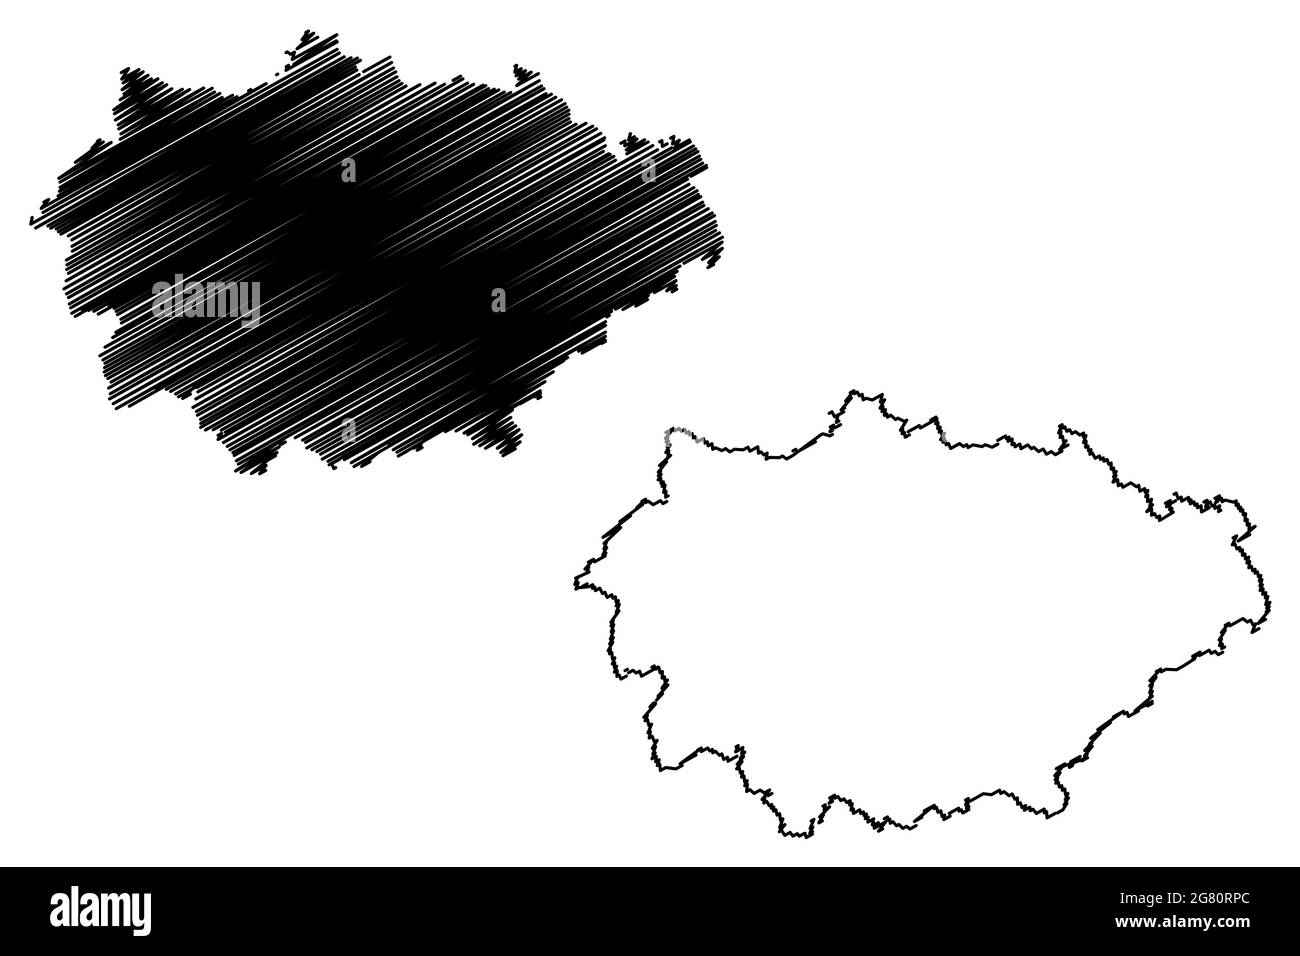 Marburg-Biedenkopf district (Federal Republic of Germany, rural district Giessen region, State of Hessen, Hesse, Hessia) map vector illustration, scri Stock Vector